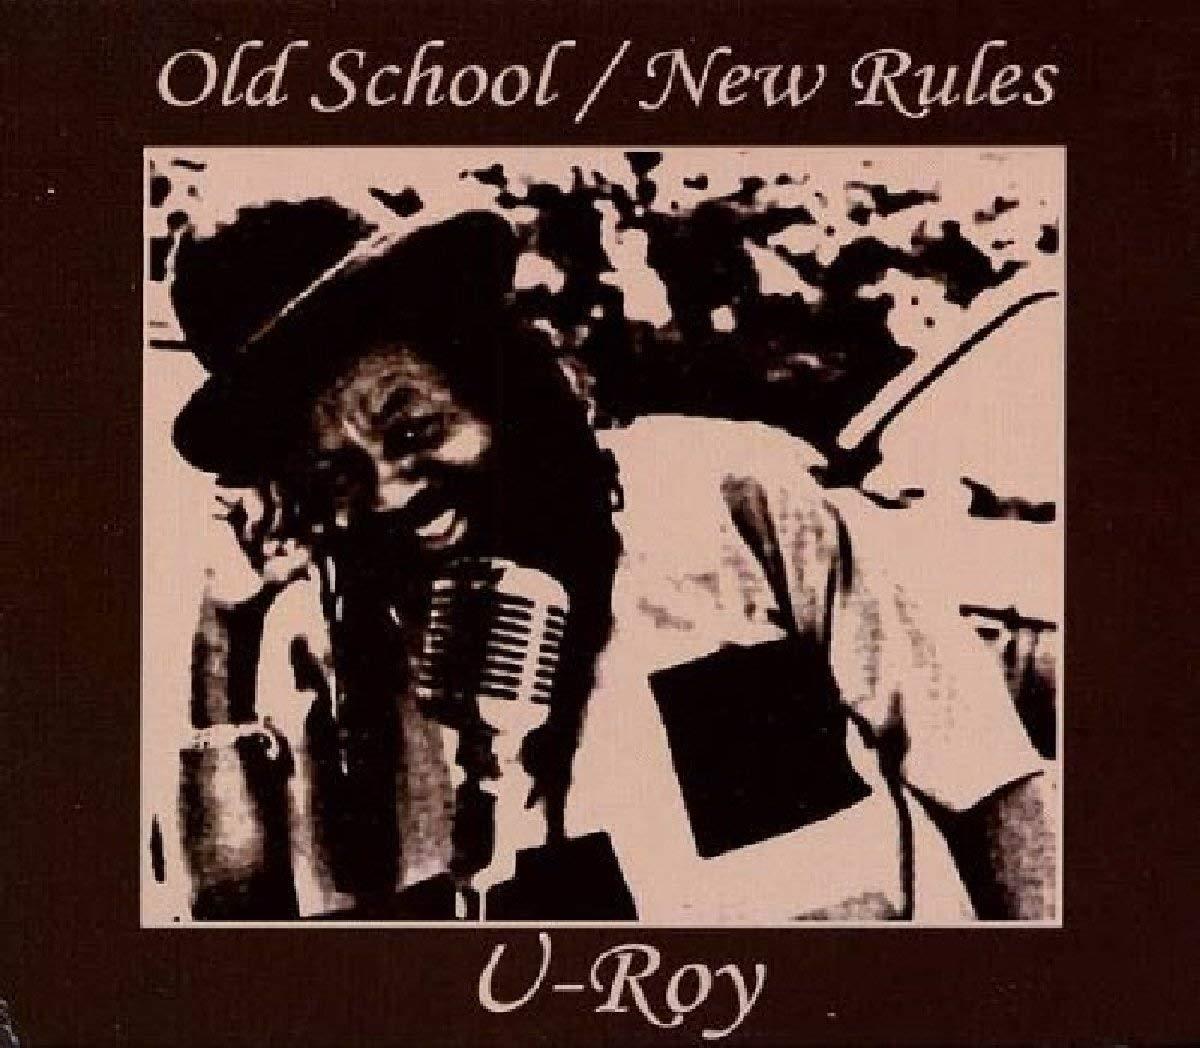 U-Roy - Old School/New Rules